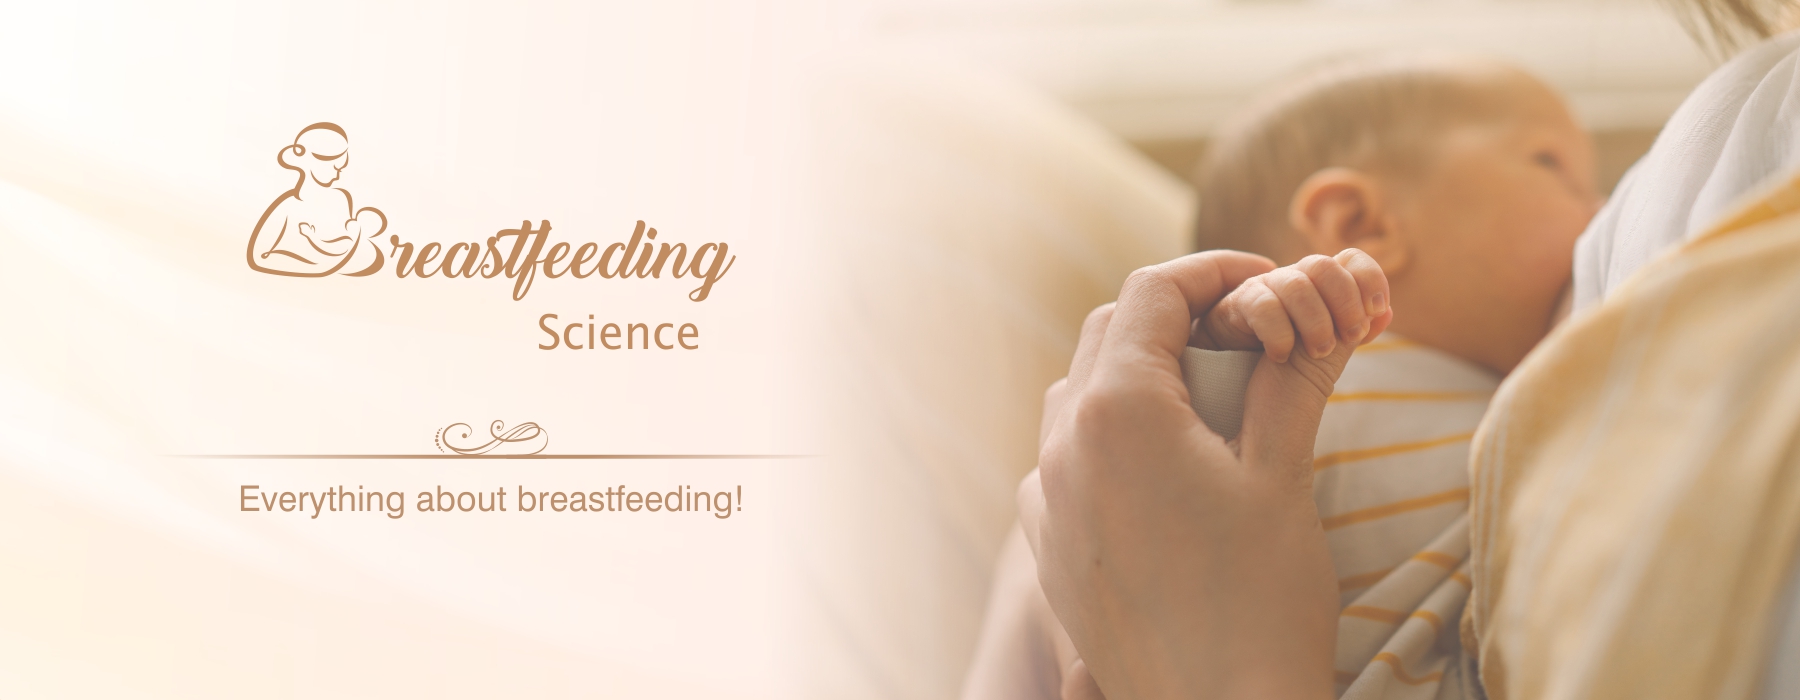 breastfeedingsupportgroup 